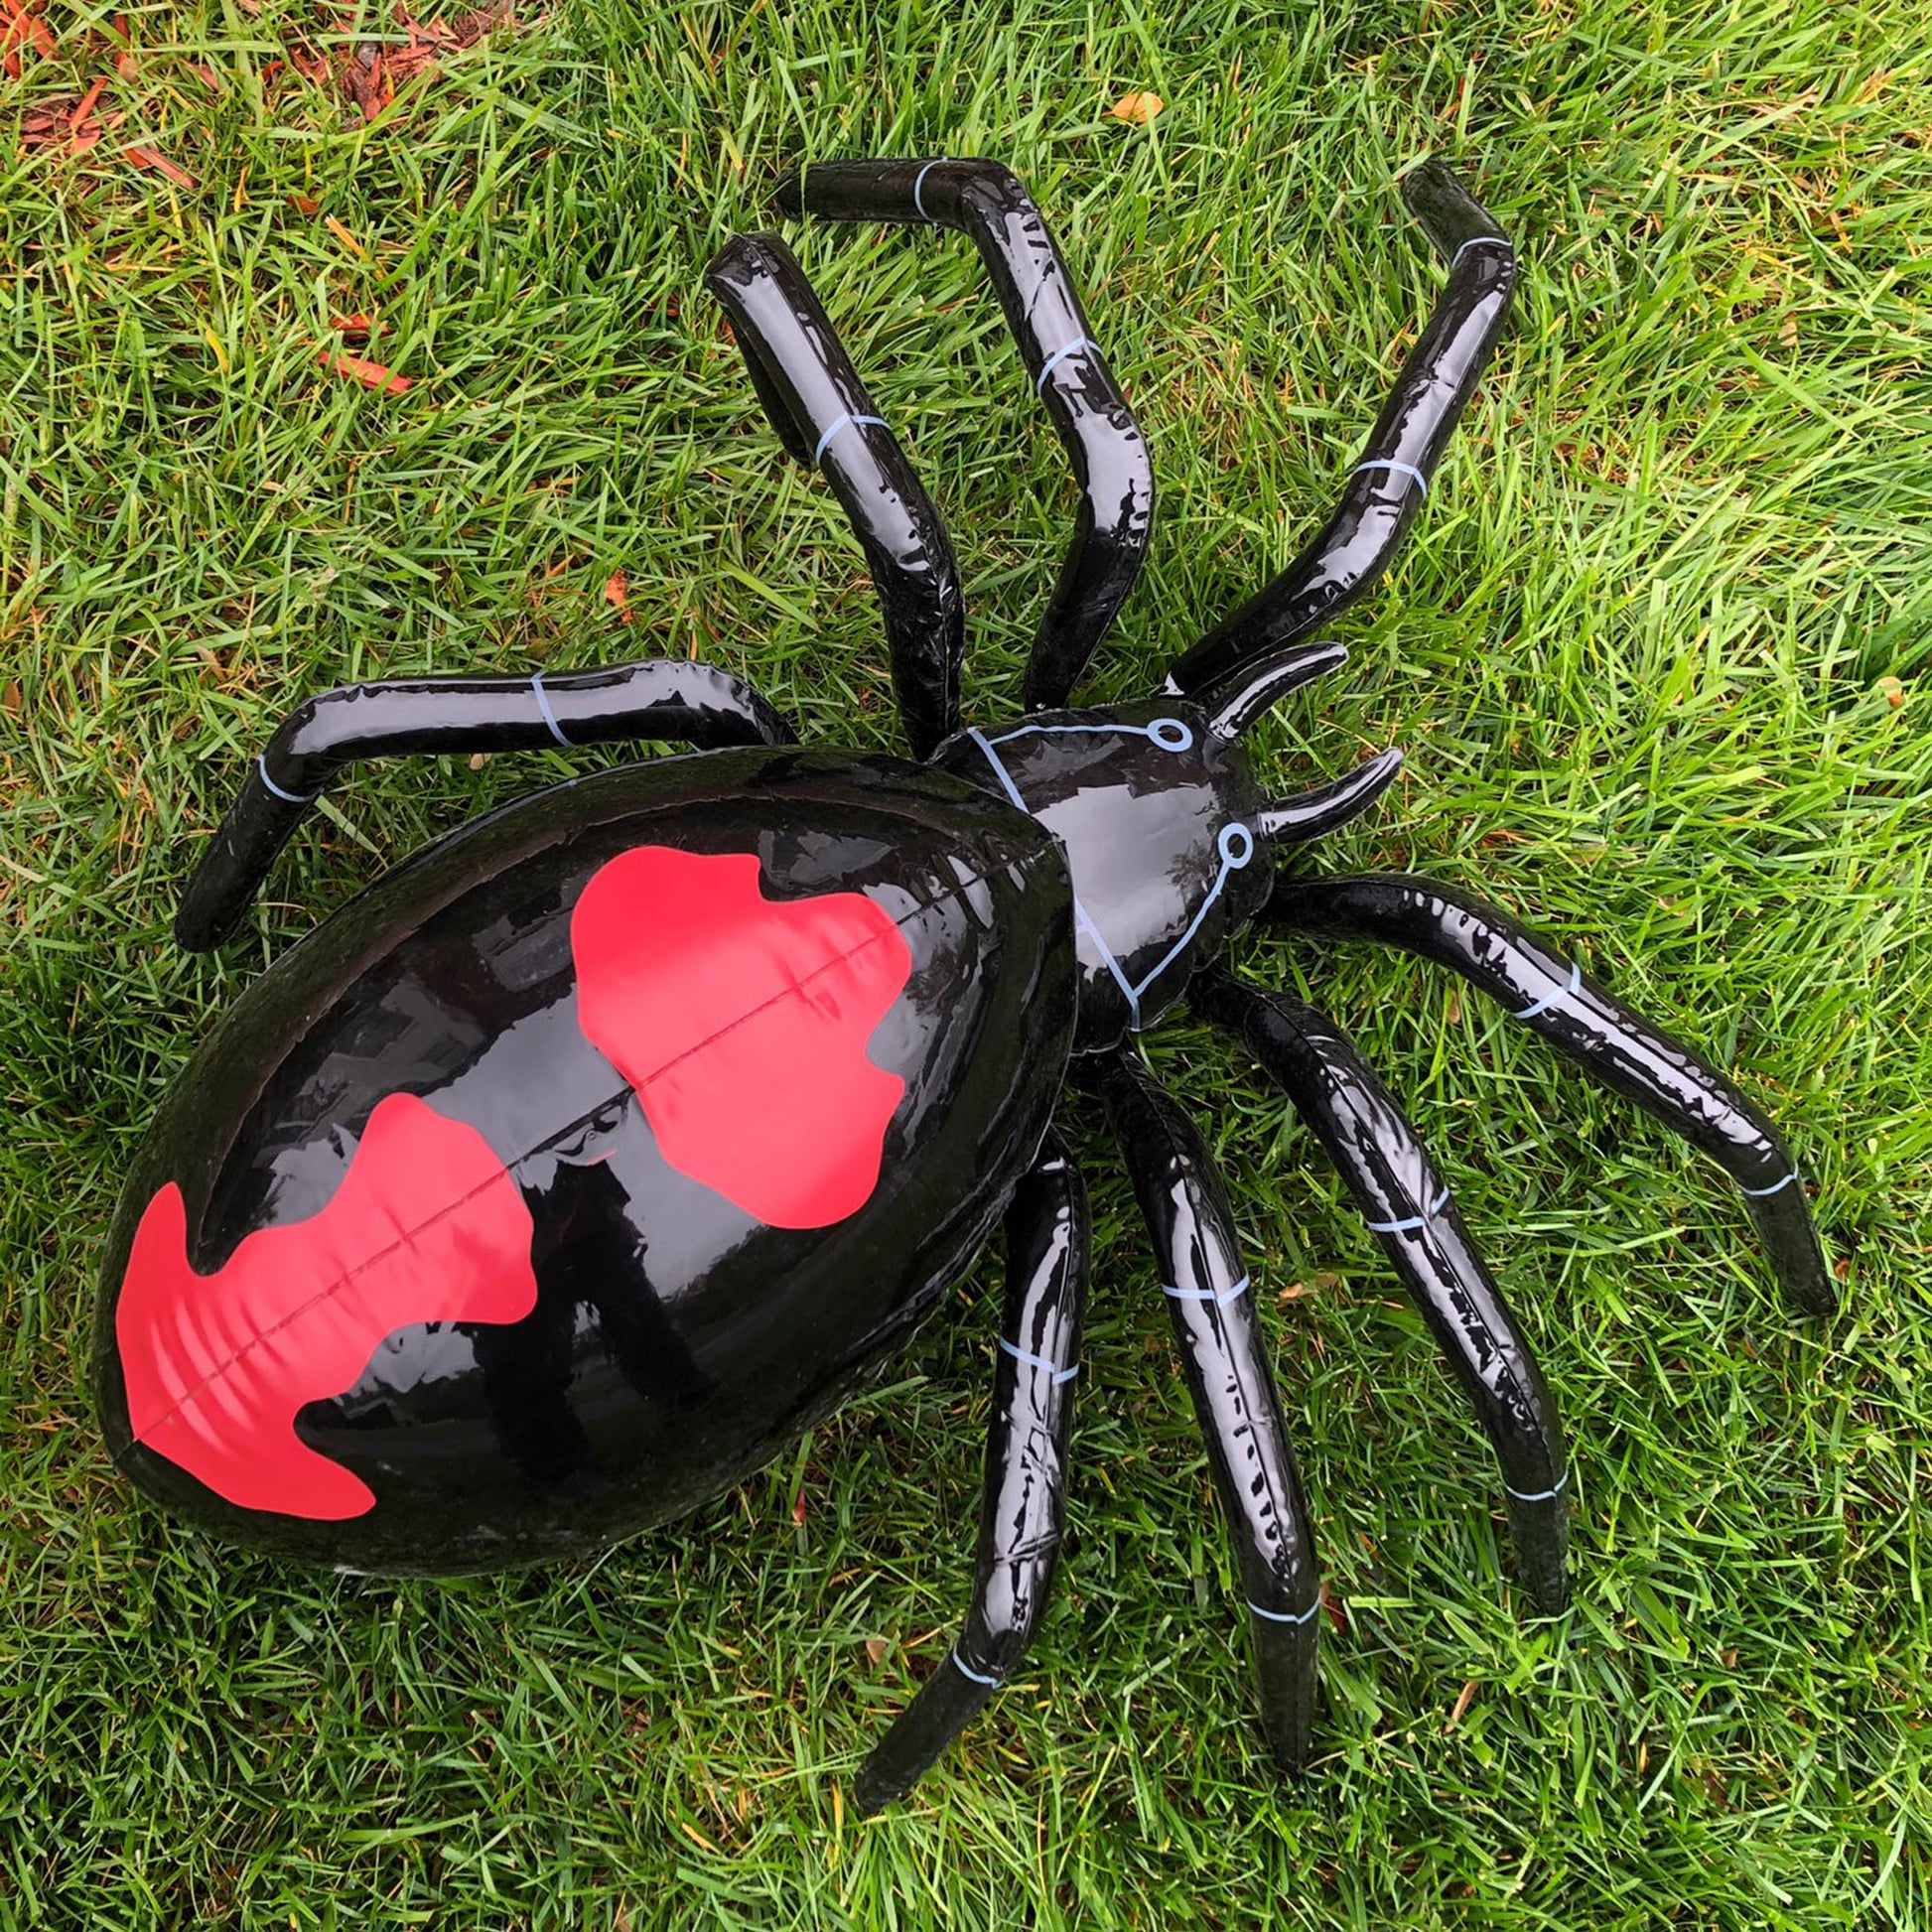 Jet Creations Spider Inflatable Black widow, 30 inch [JET-SPIDER]